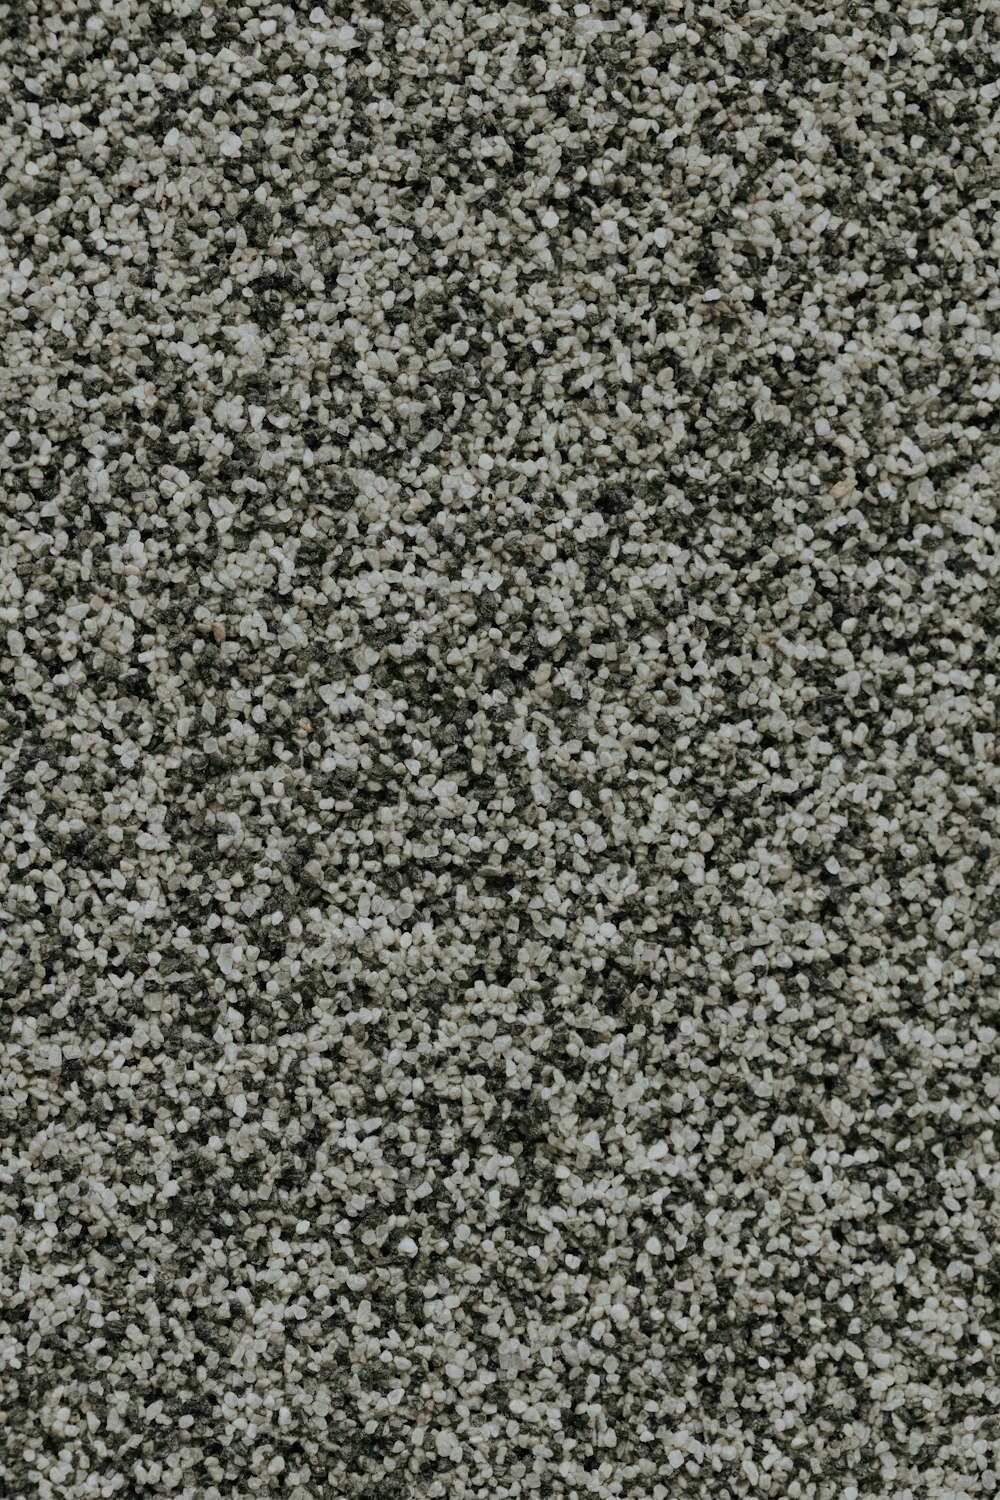 a close up of a gray carpet texture